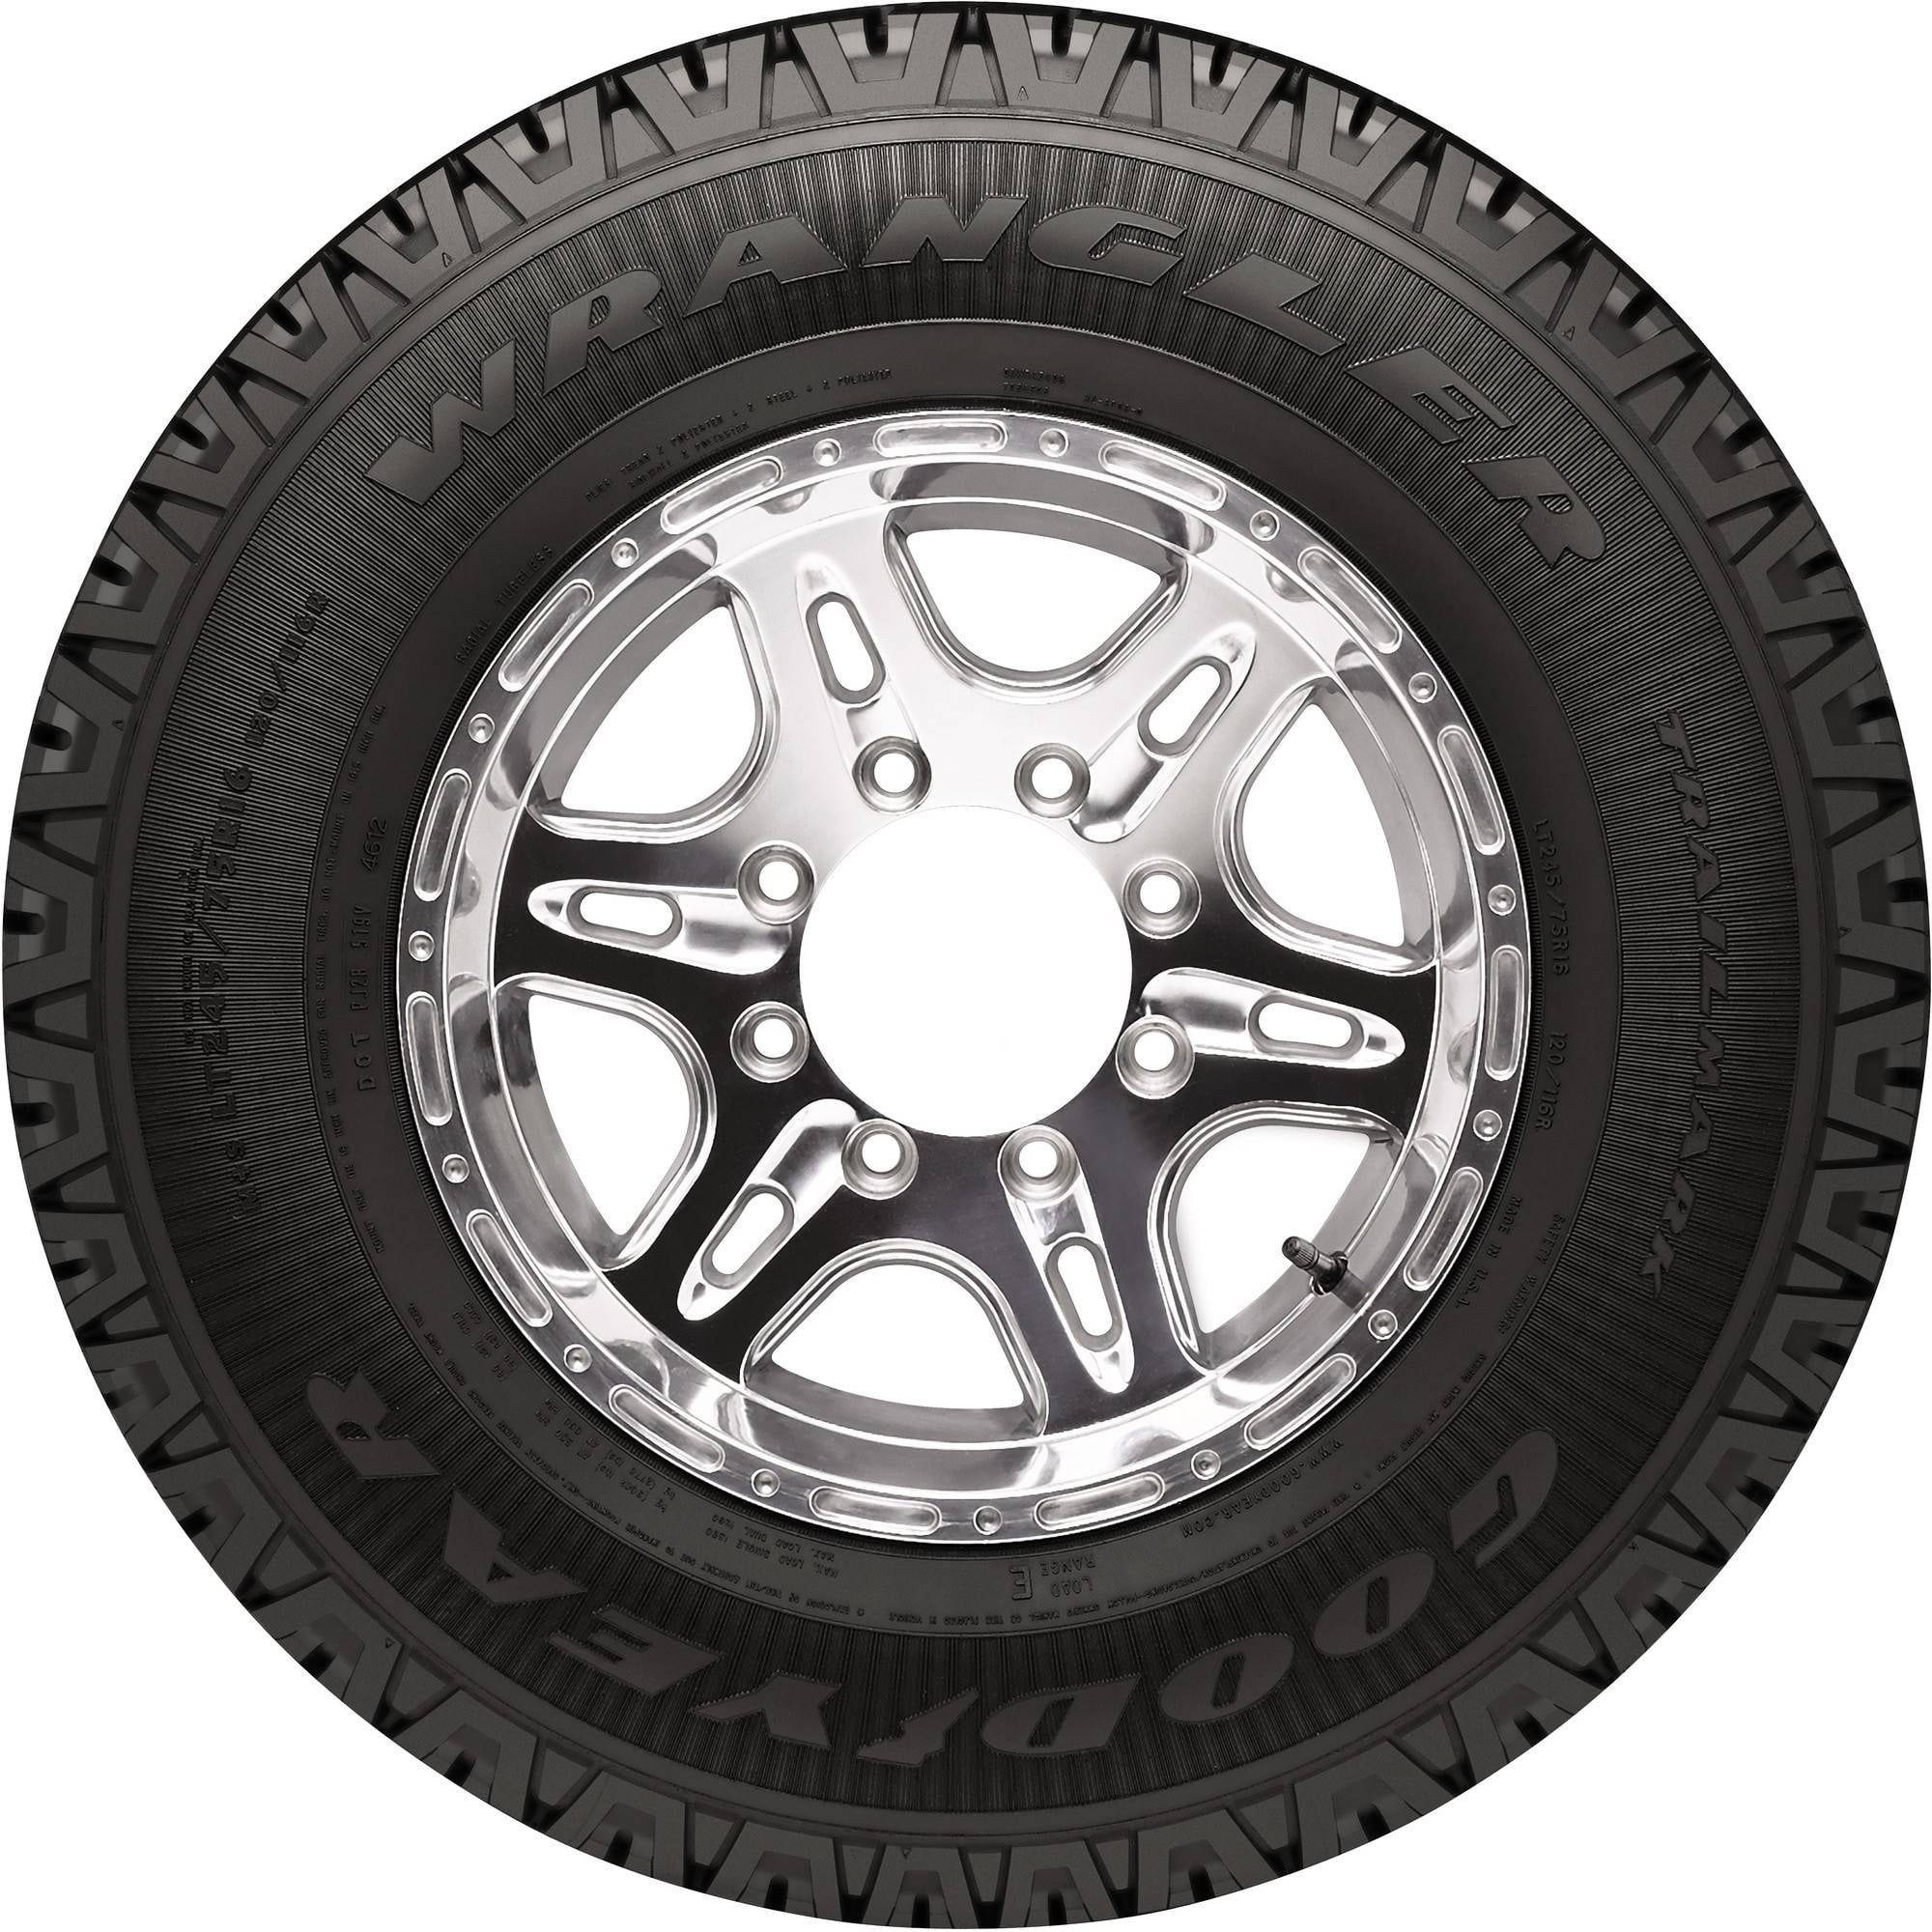 Goodyear Wrangler Trailmark 265/70R17 113S All-Season Tire 